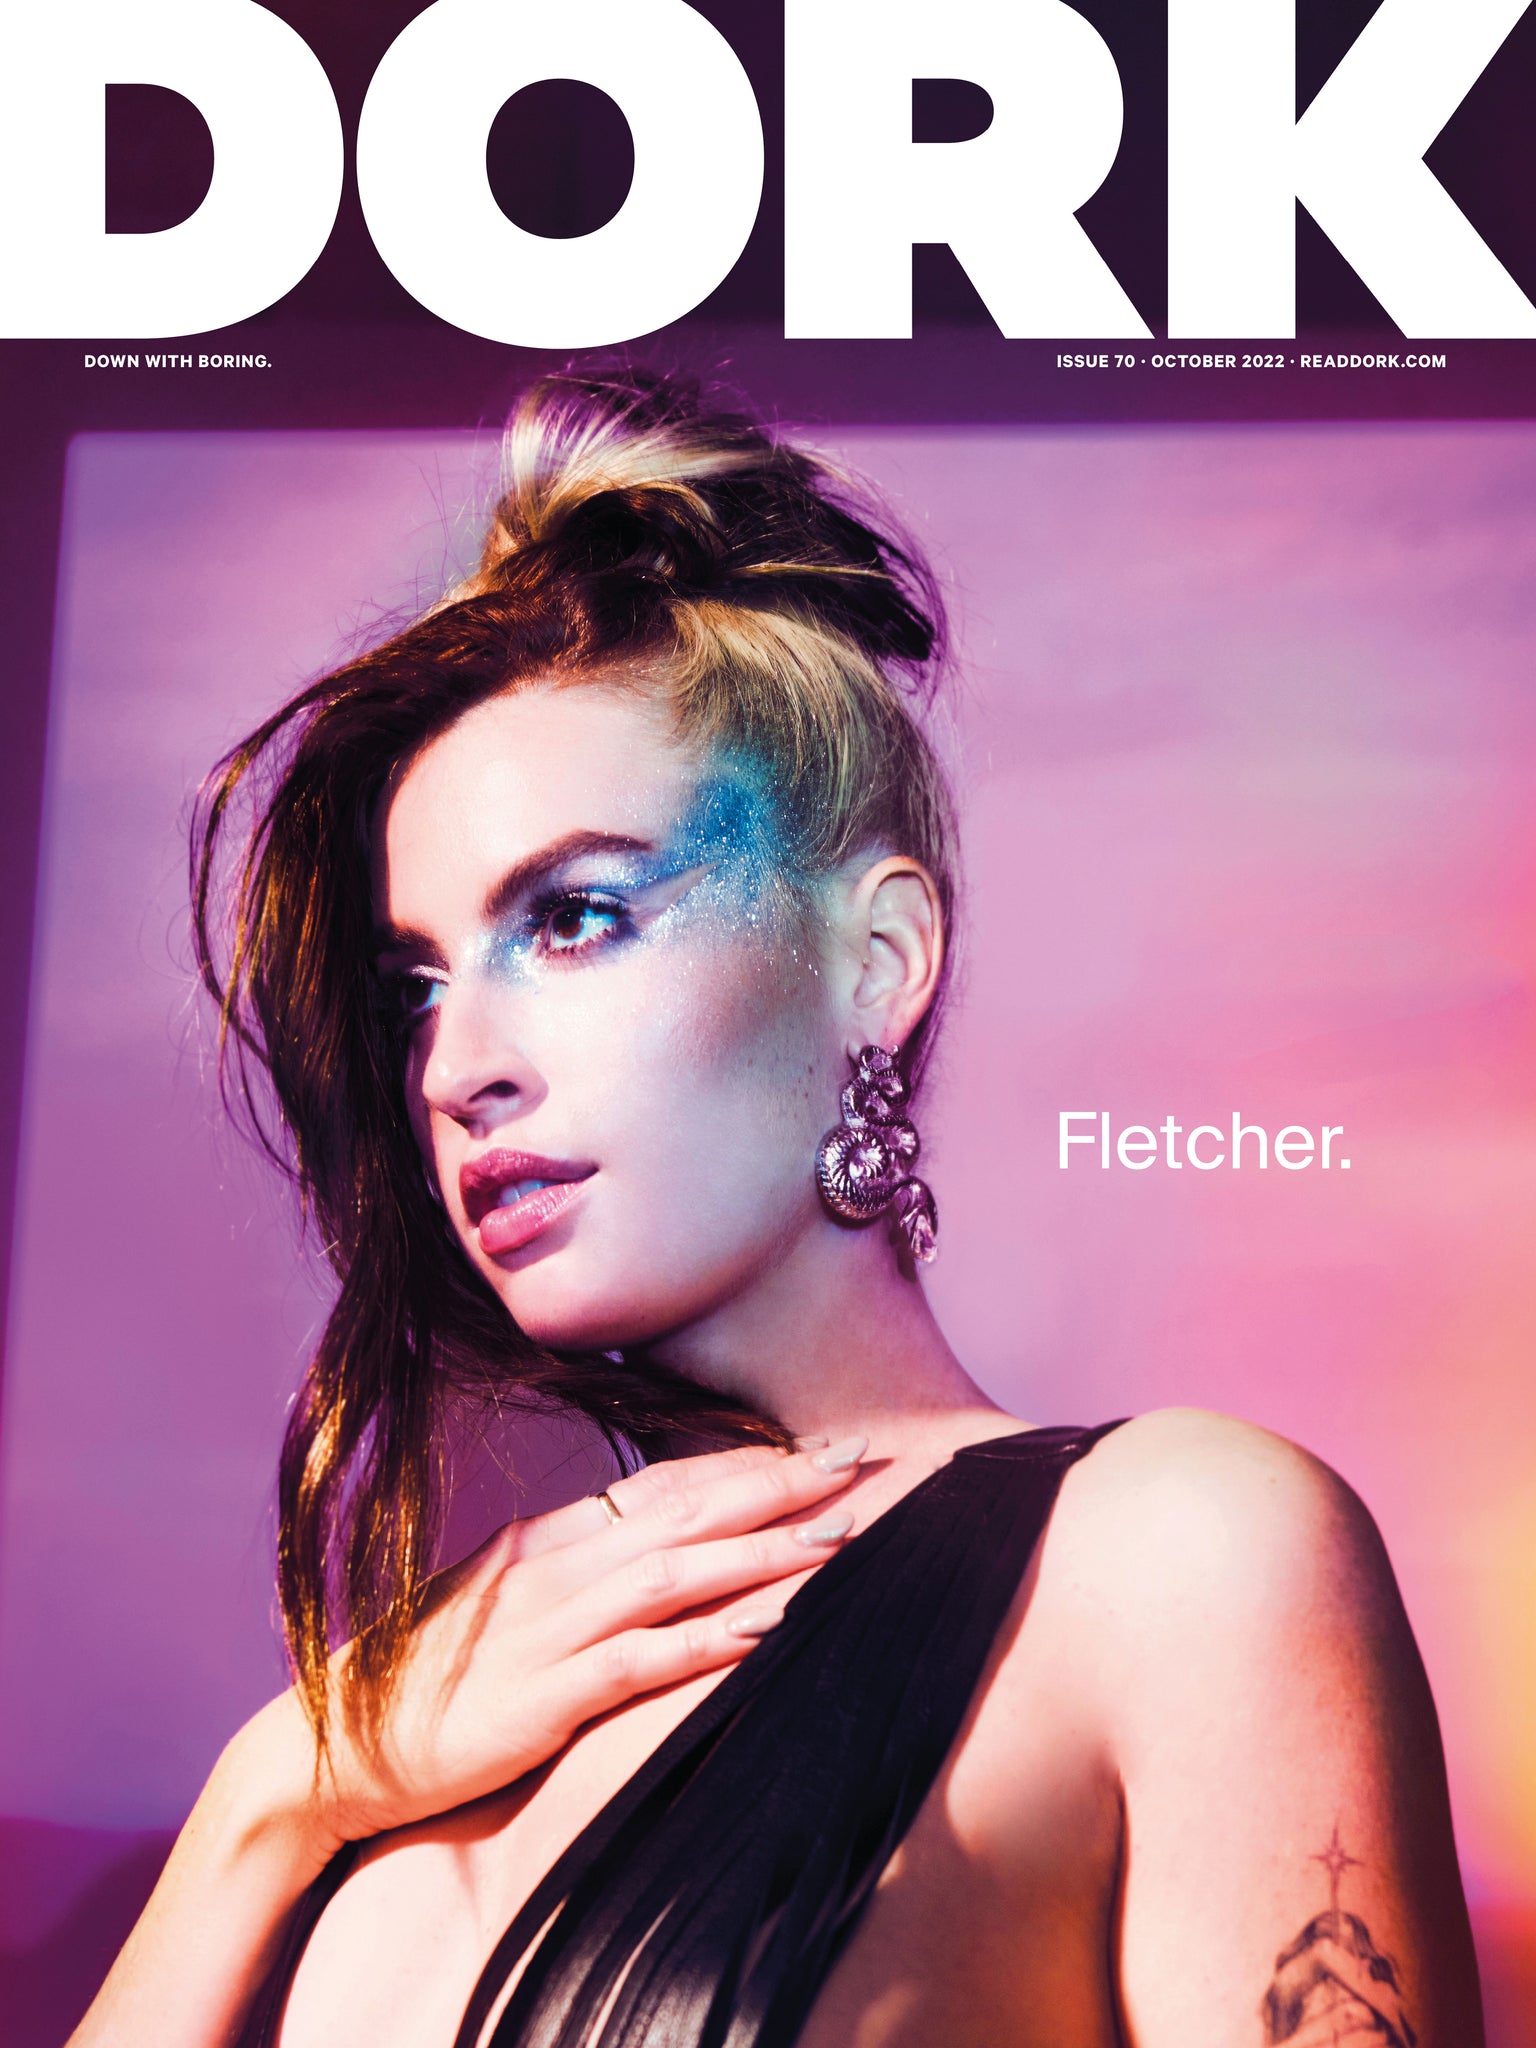 Dork, October 2022 (Fletcher cover)